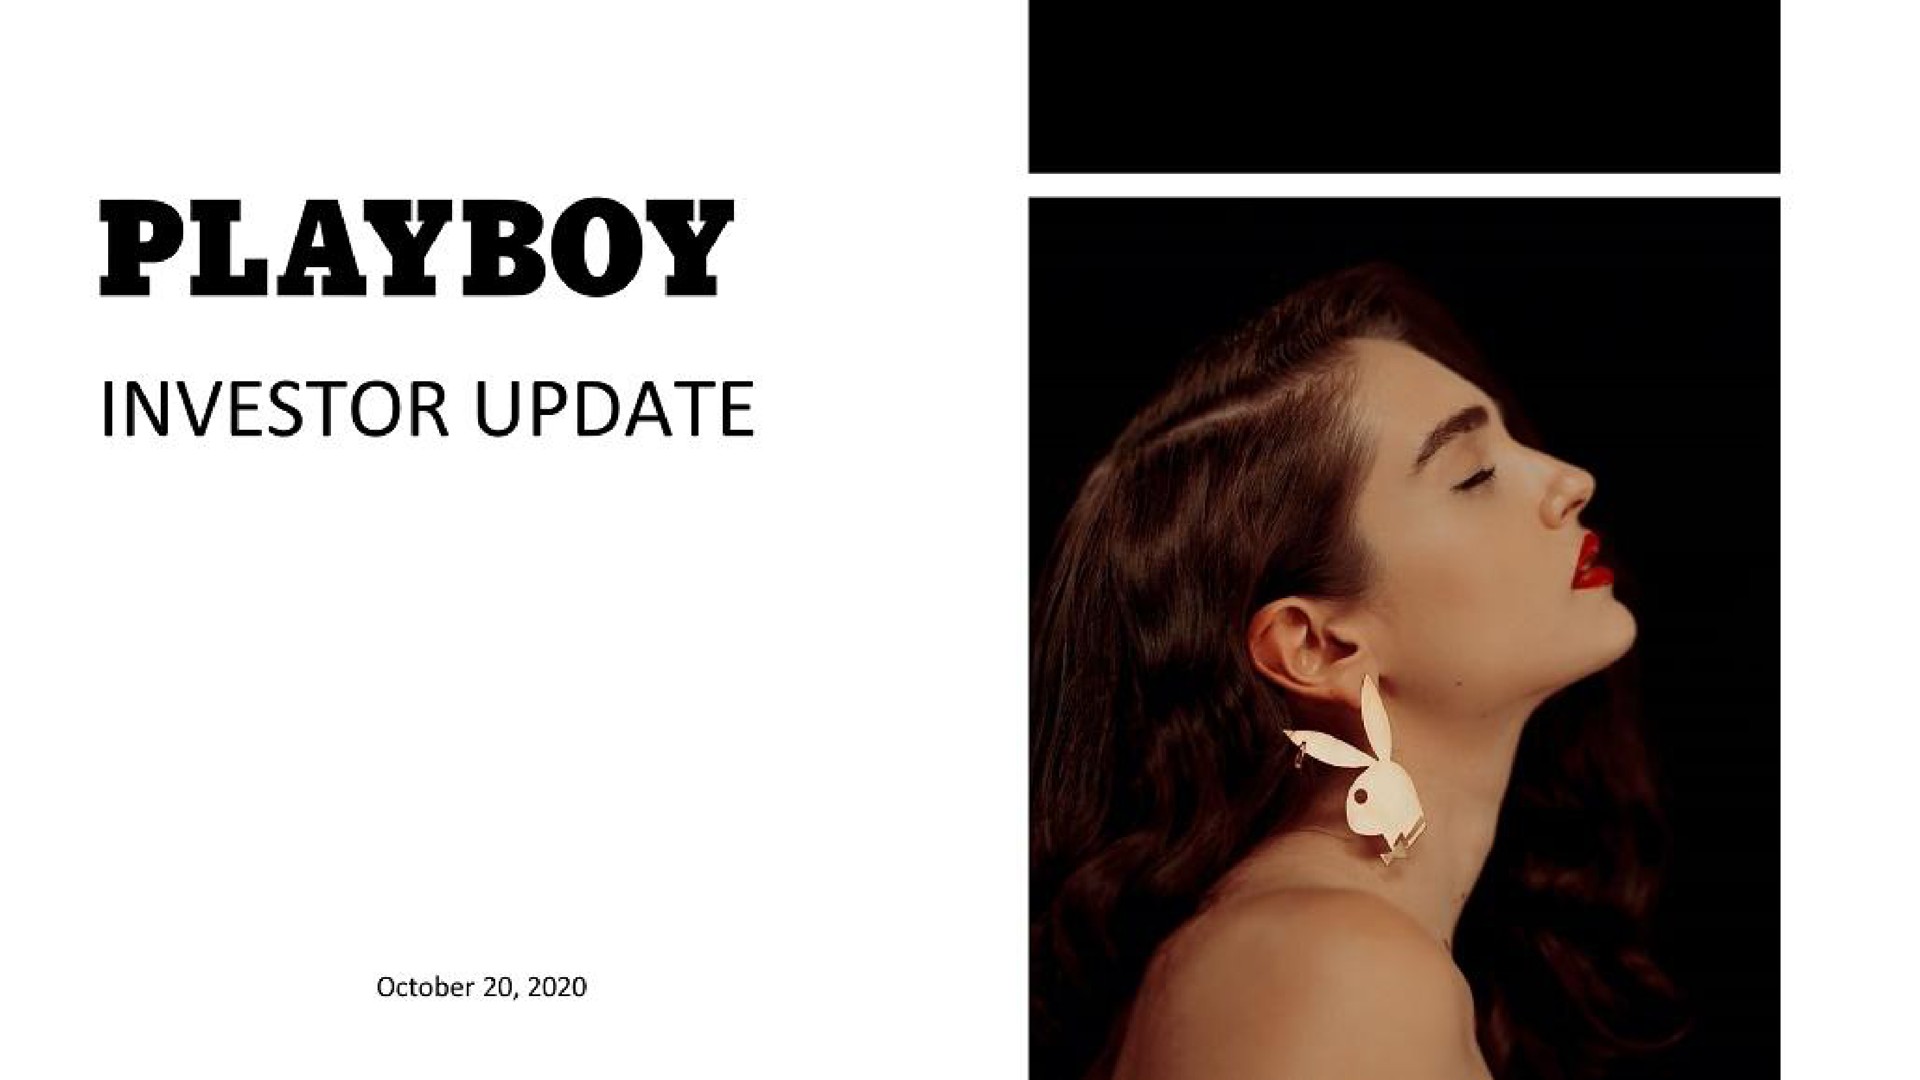 playboy investor update | Playboy